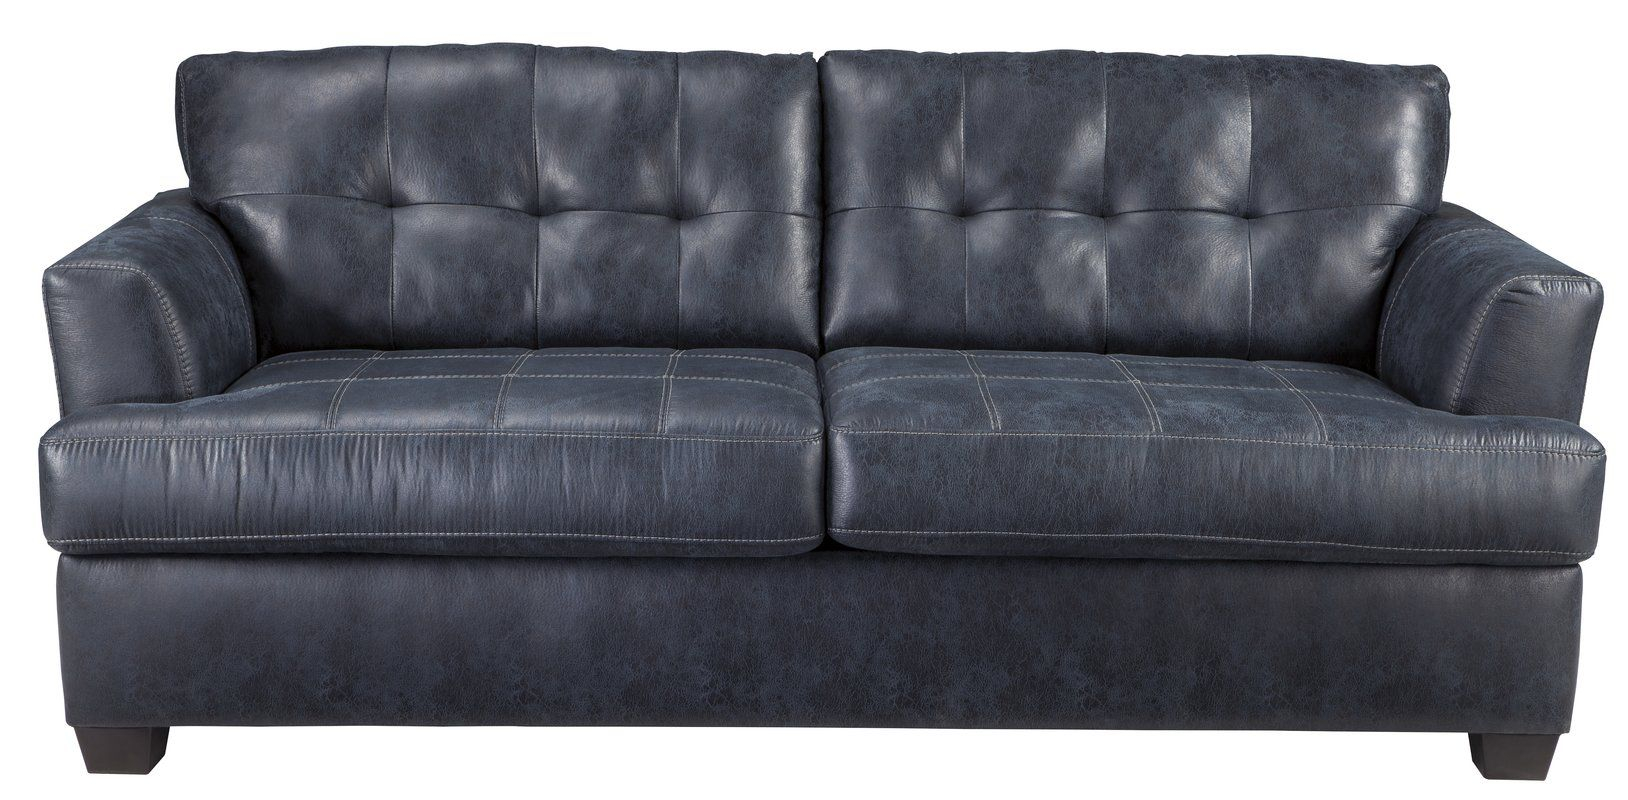 joss and main leather sofa